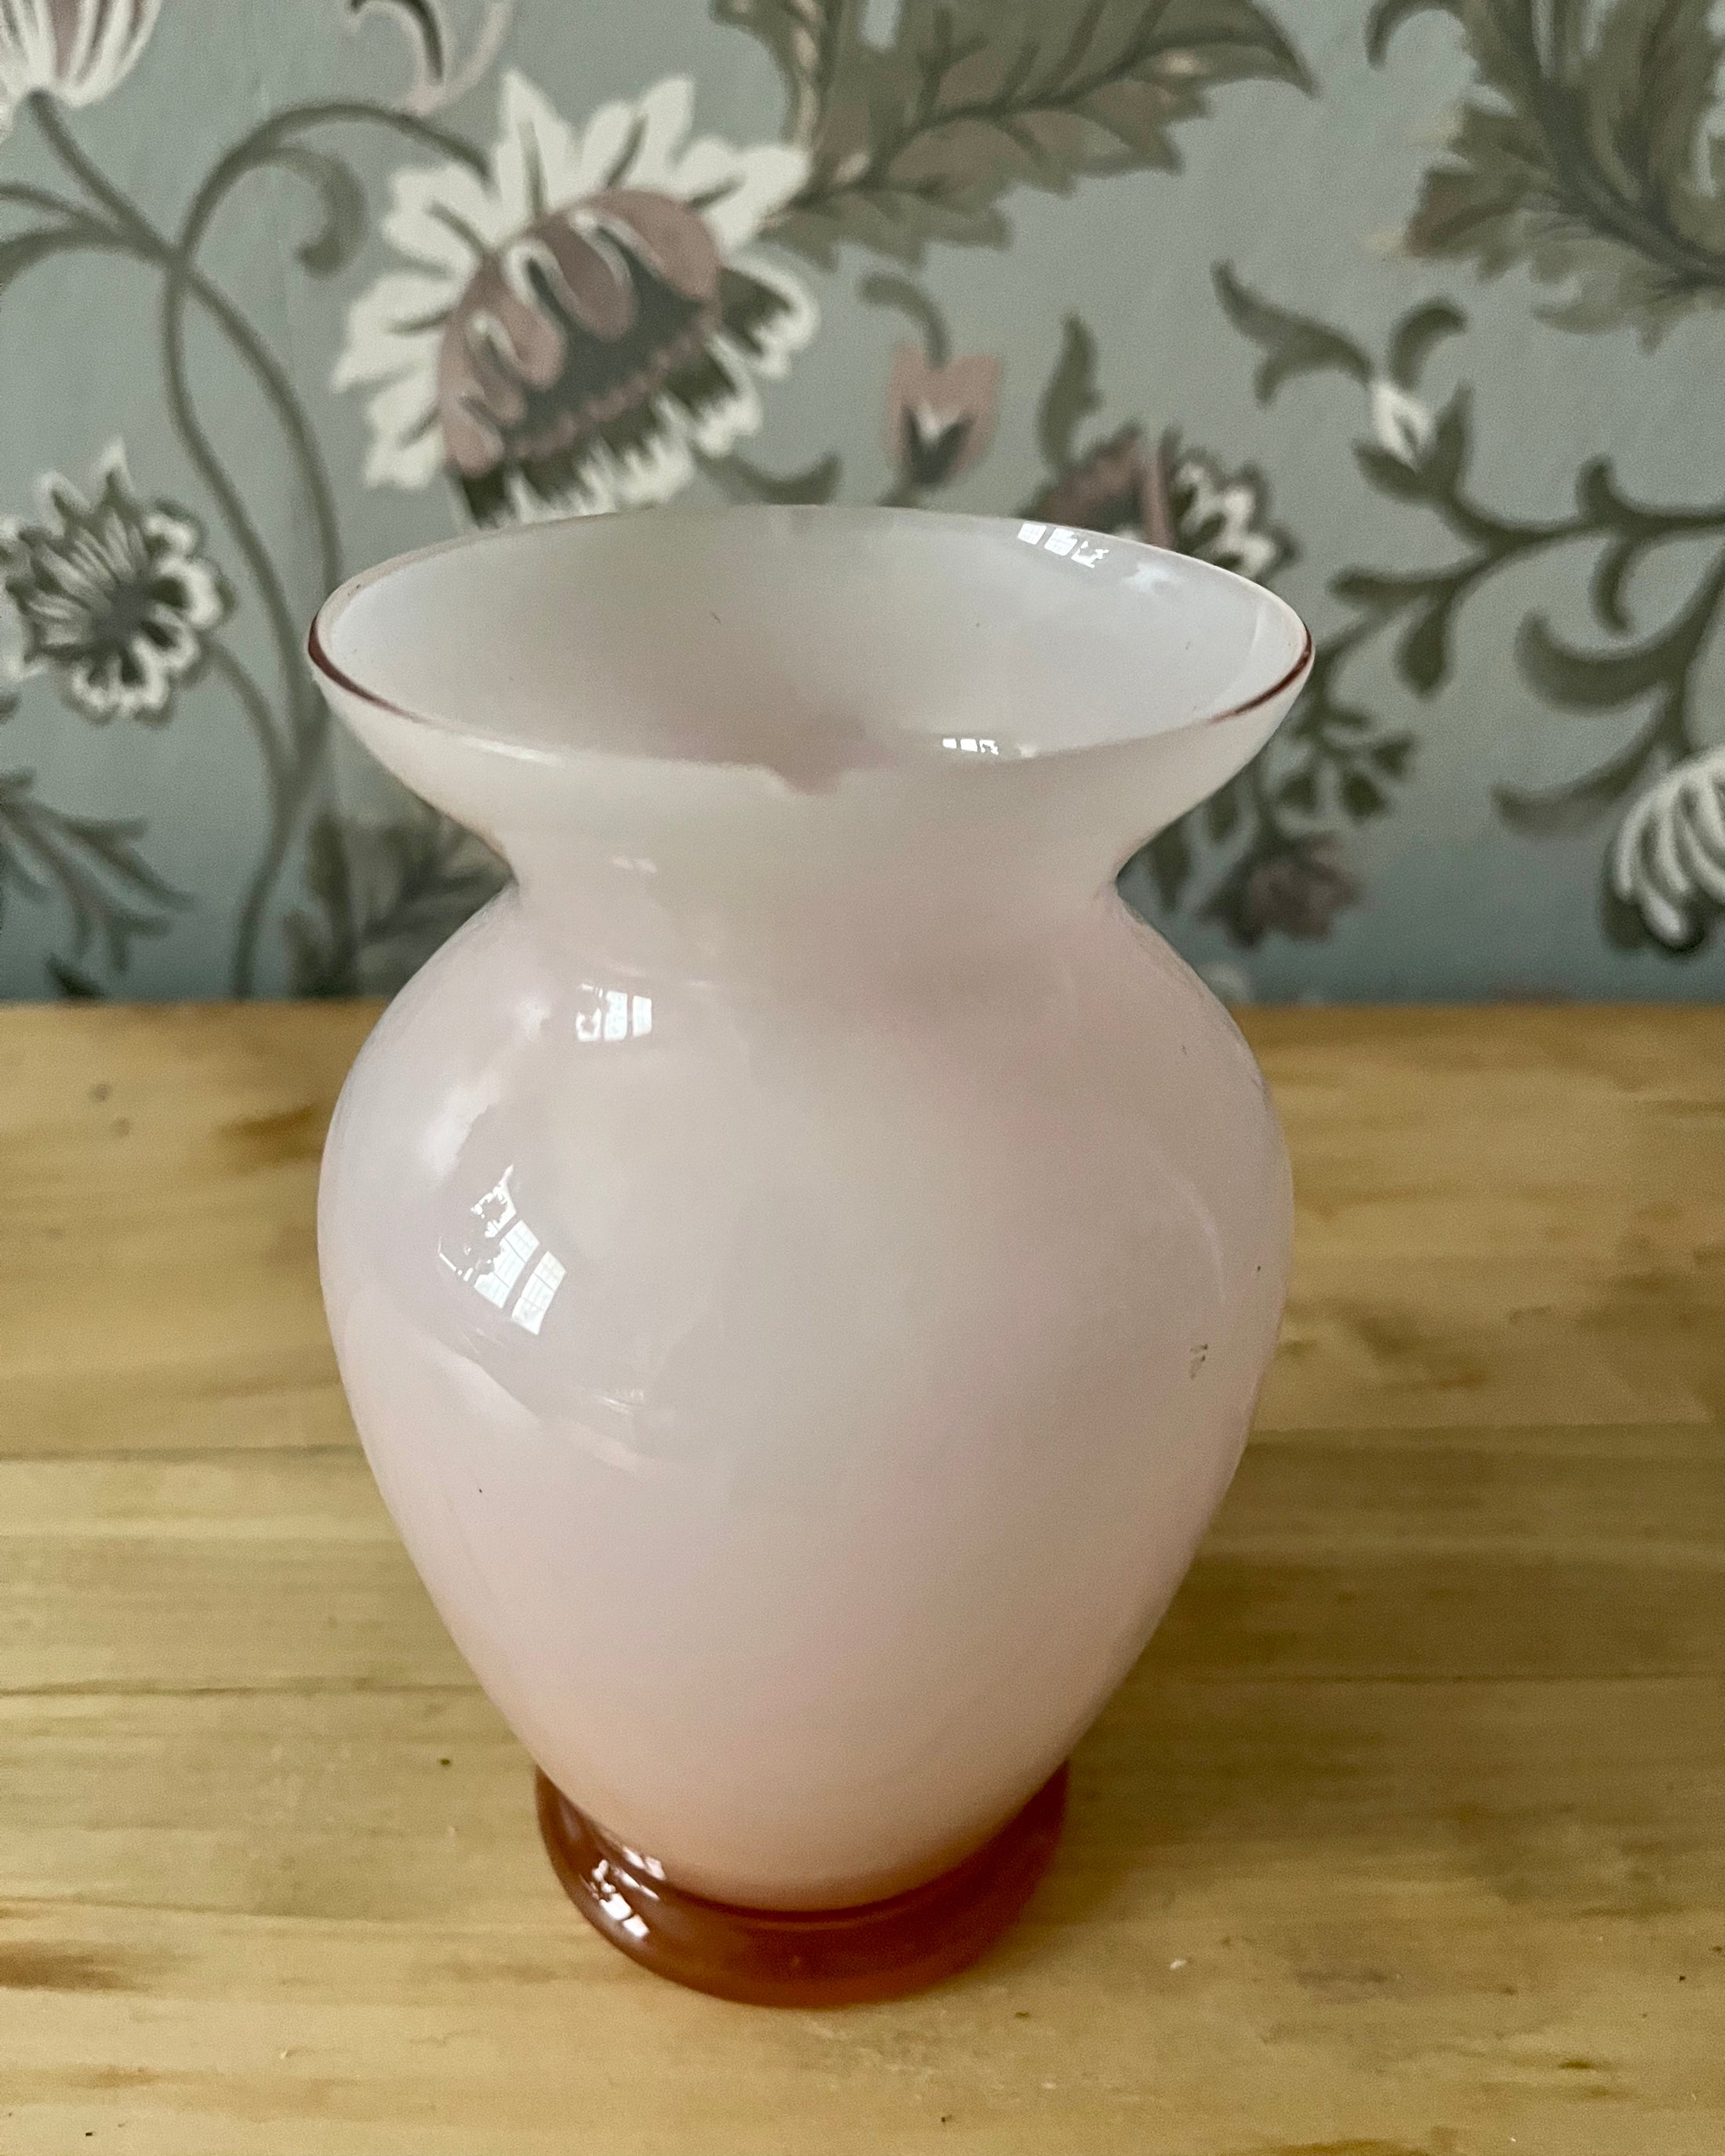 Vase en opaline rose